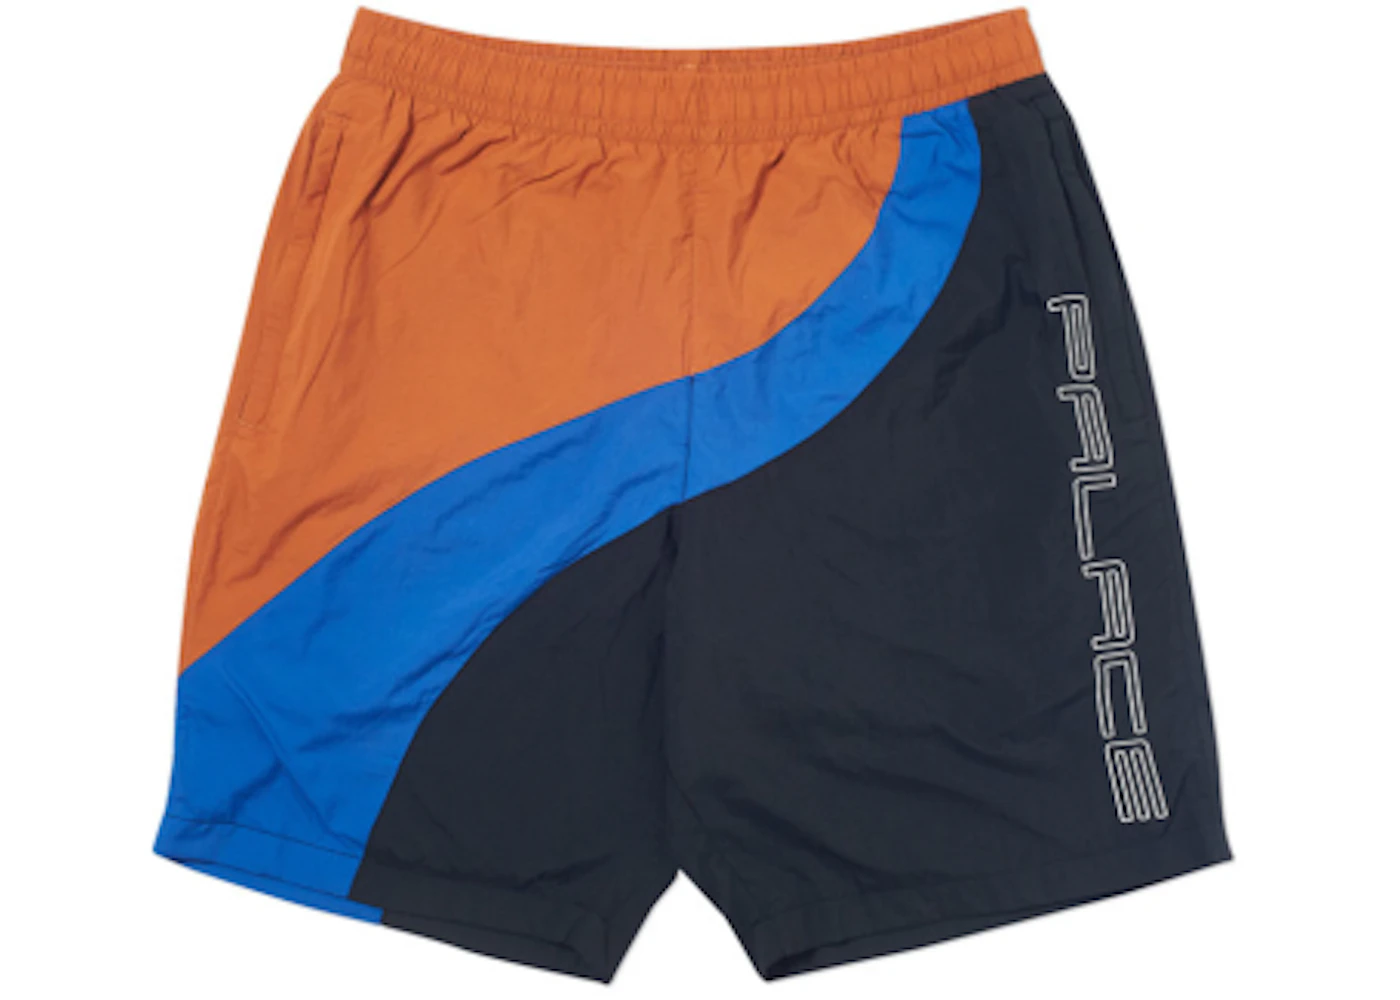 Palace Wave Runner Shell Shorts Black/Blue/Orange Men's - SS19 - GB